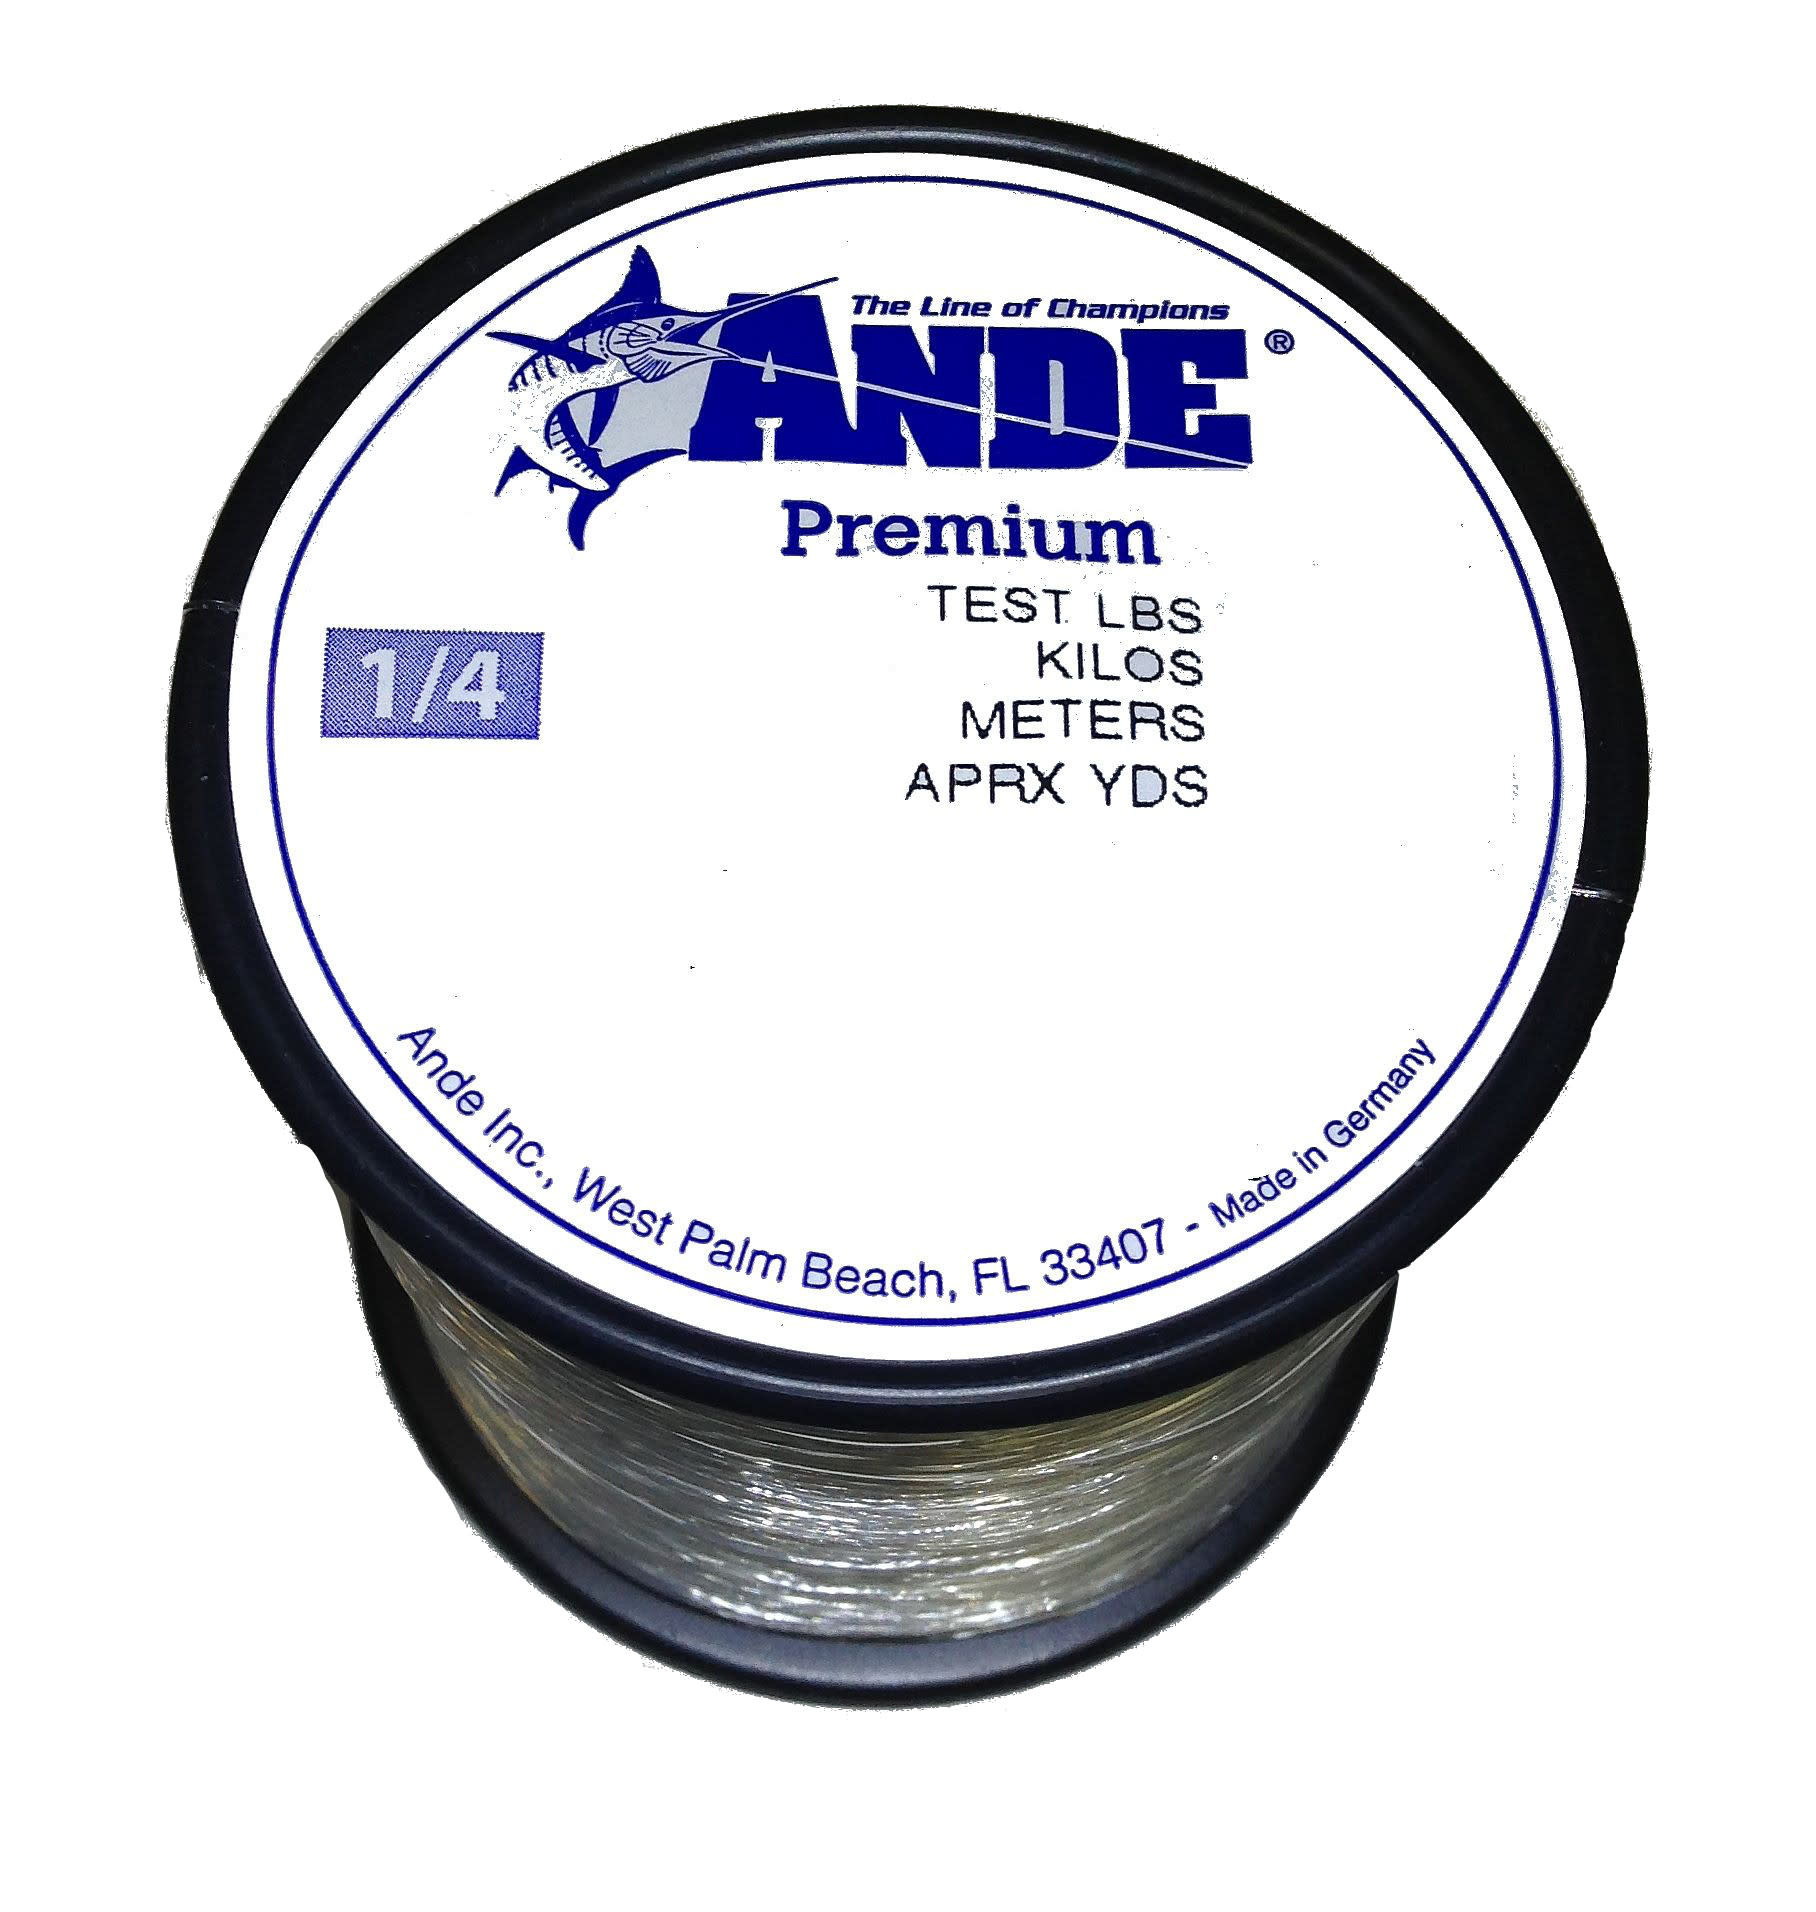 Ande Premium Monofilament Line 20 lb.; Clear; 1/4 lb.